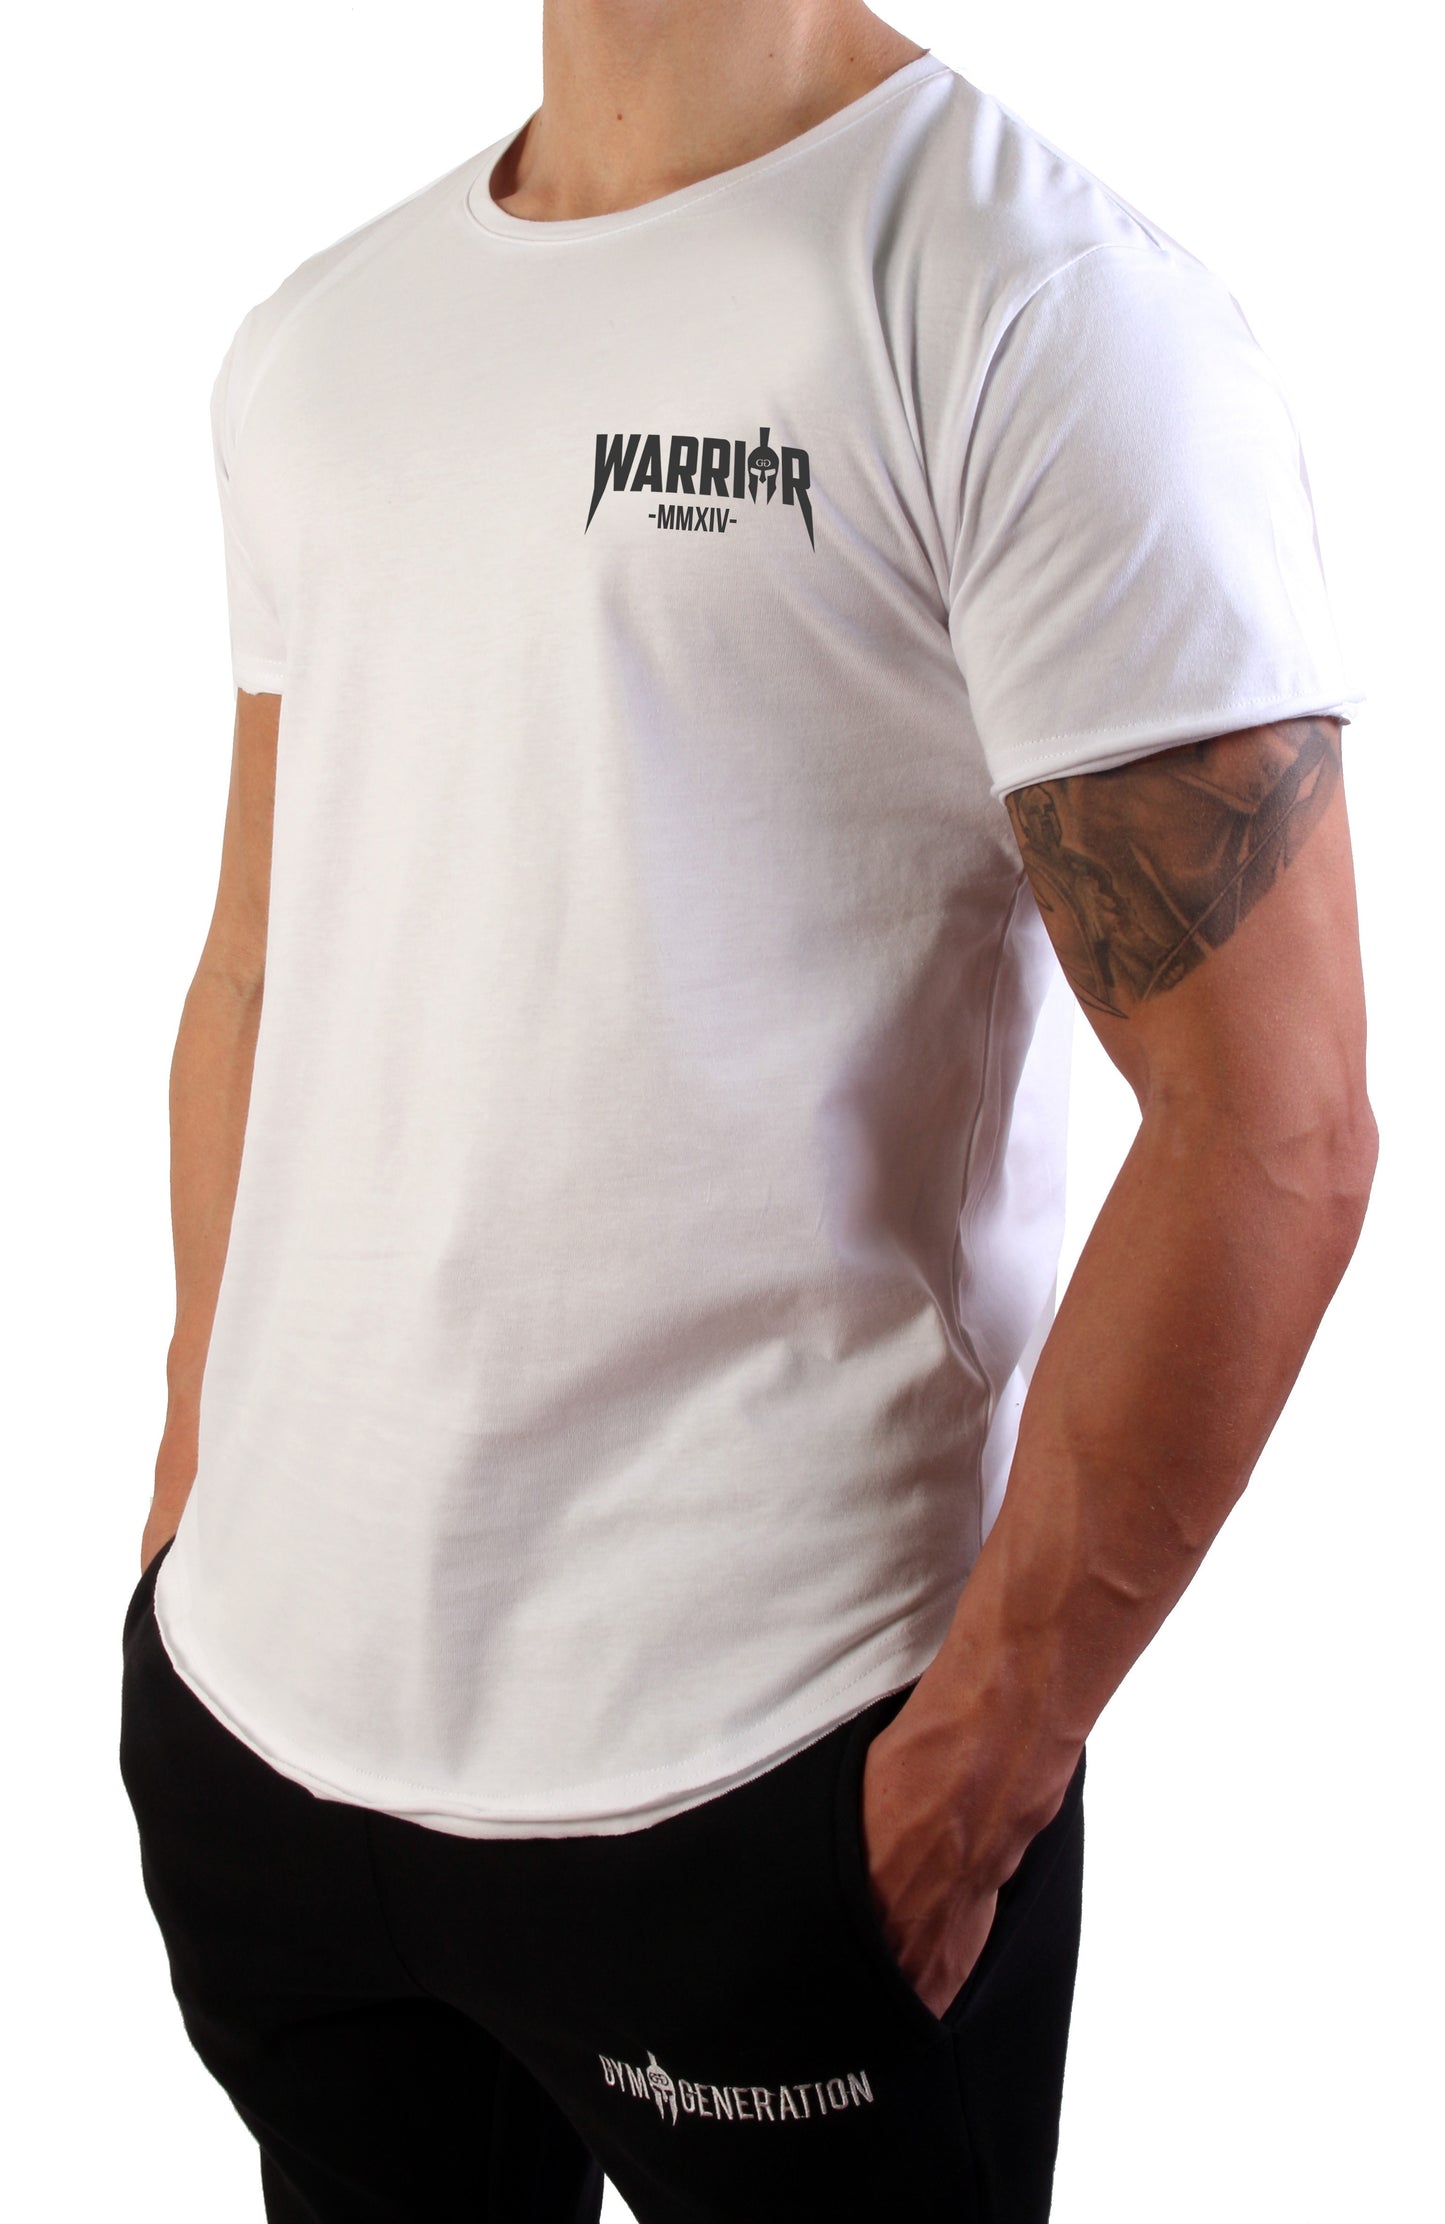 Urban Warrior T-Shirt - White